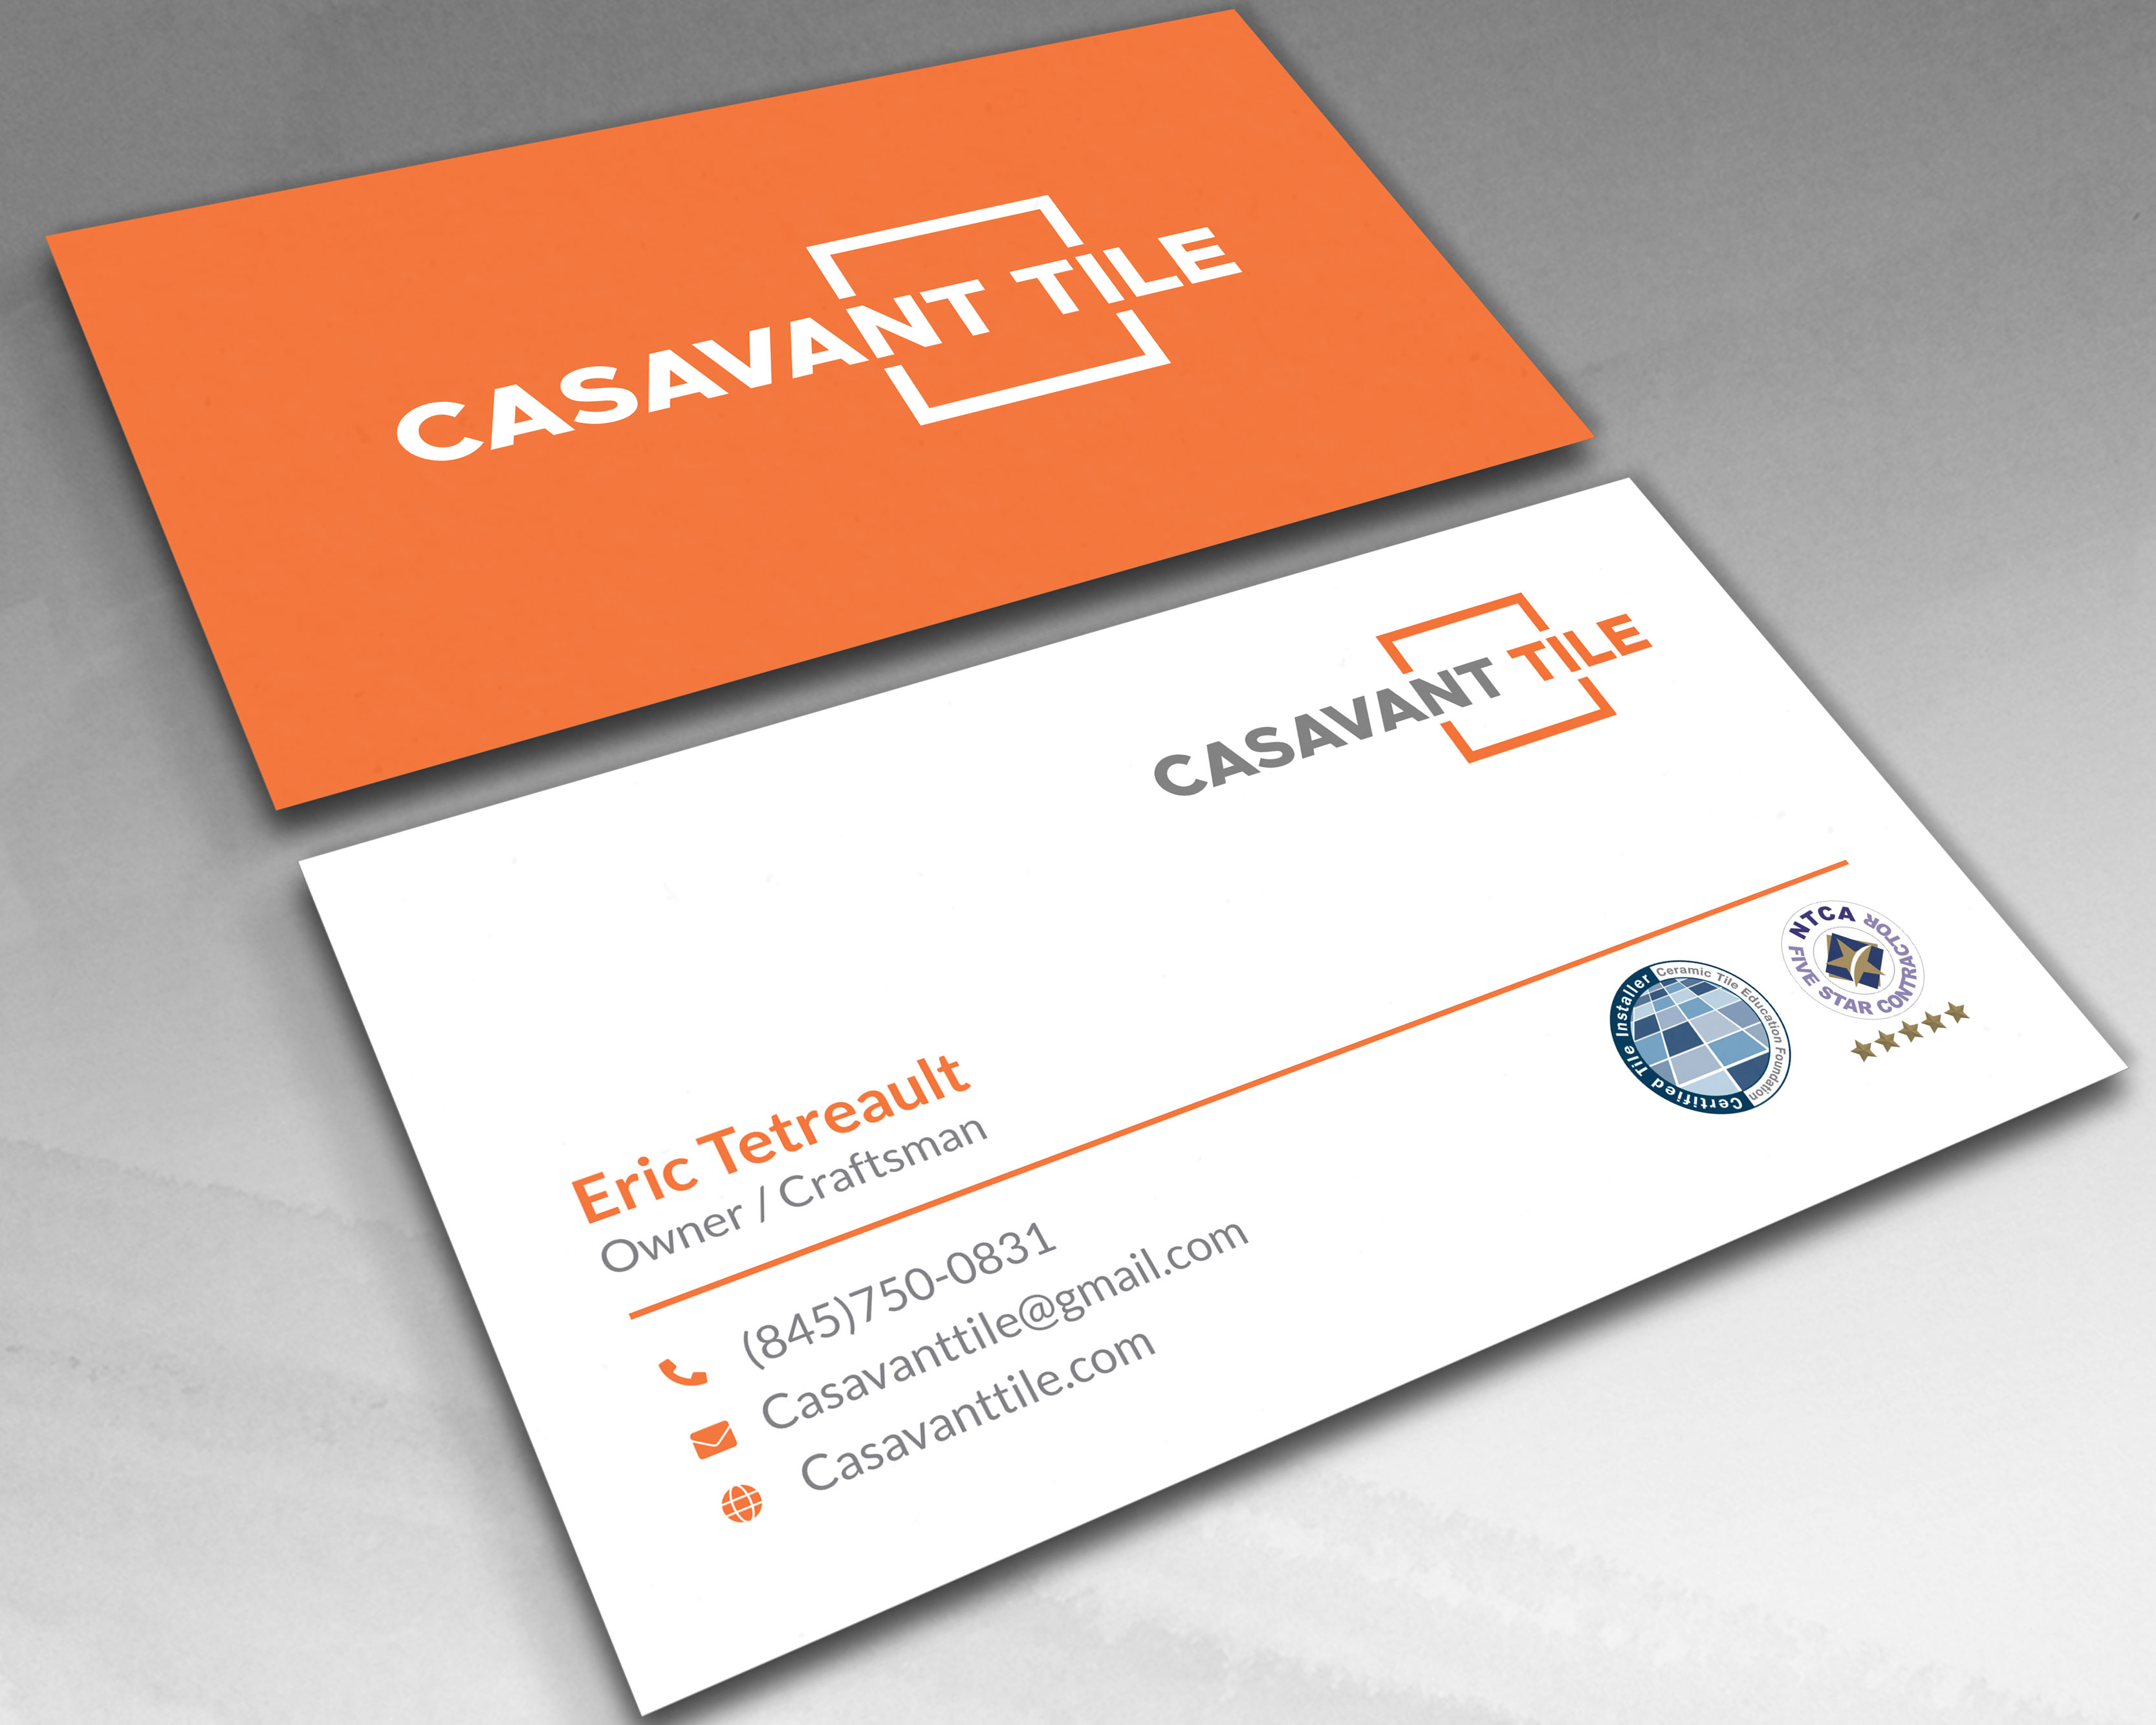 Business Card & Stationery Design entry 1776362 submitted by frits130by to the Business Card & Stationery Design for Casavant Tile run by CasavantTile